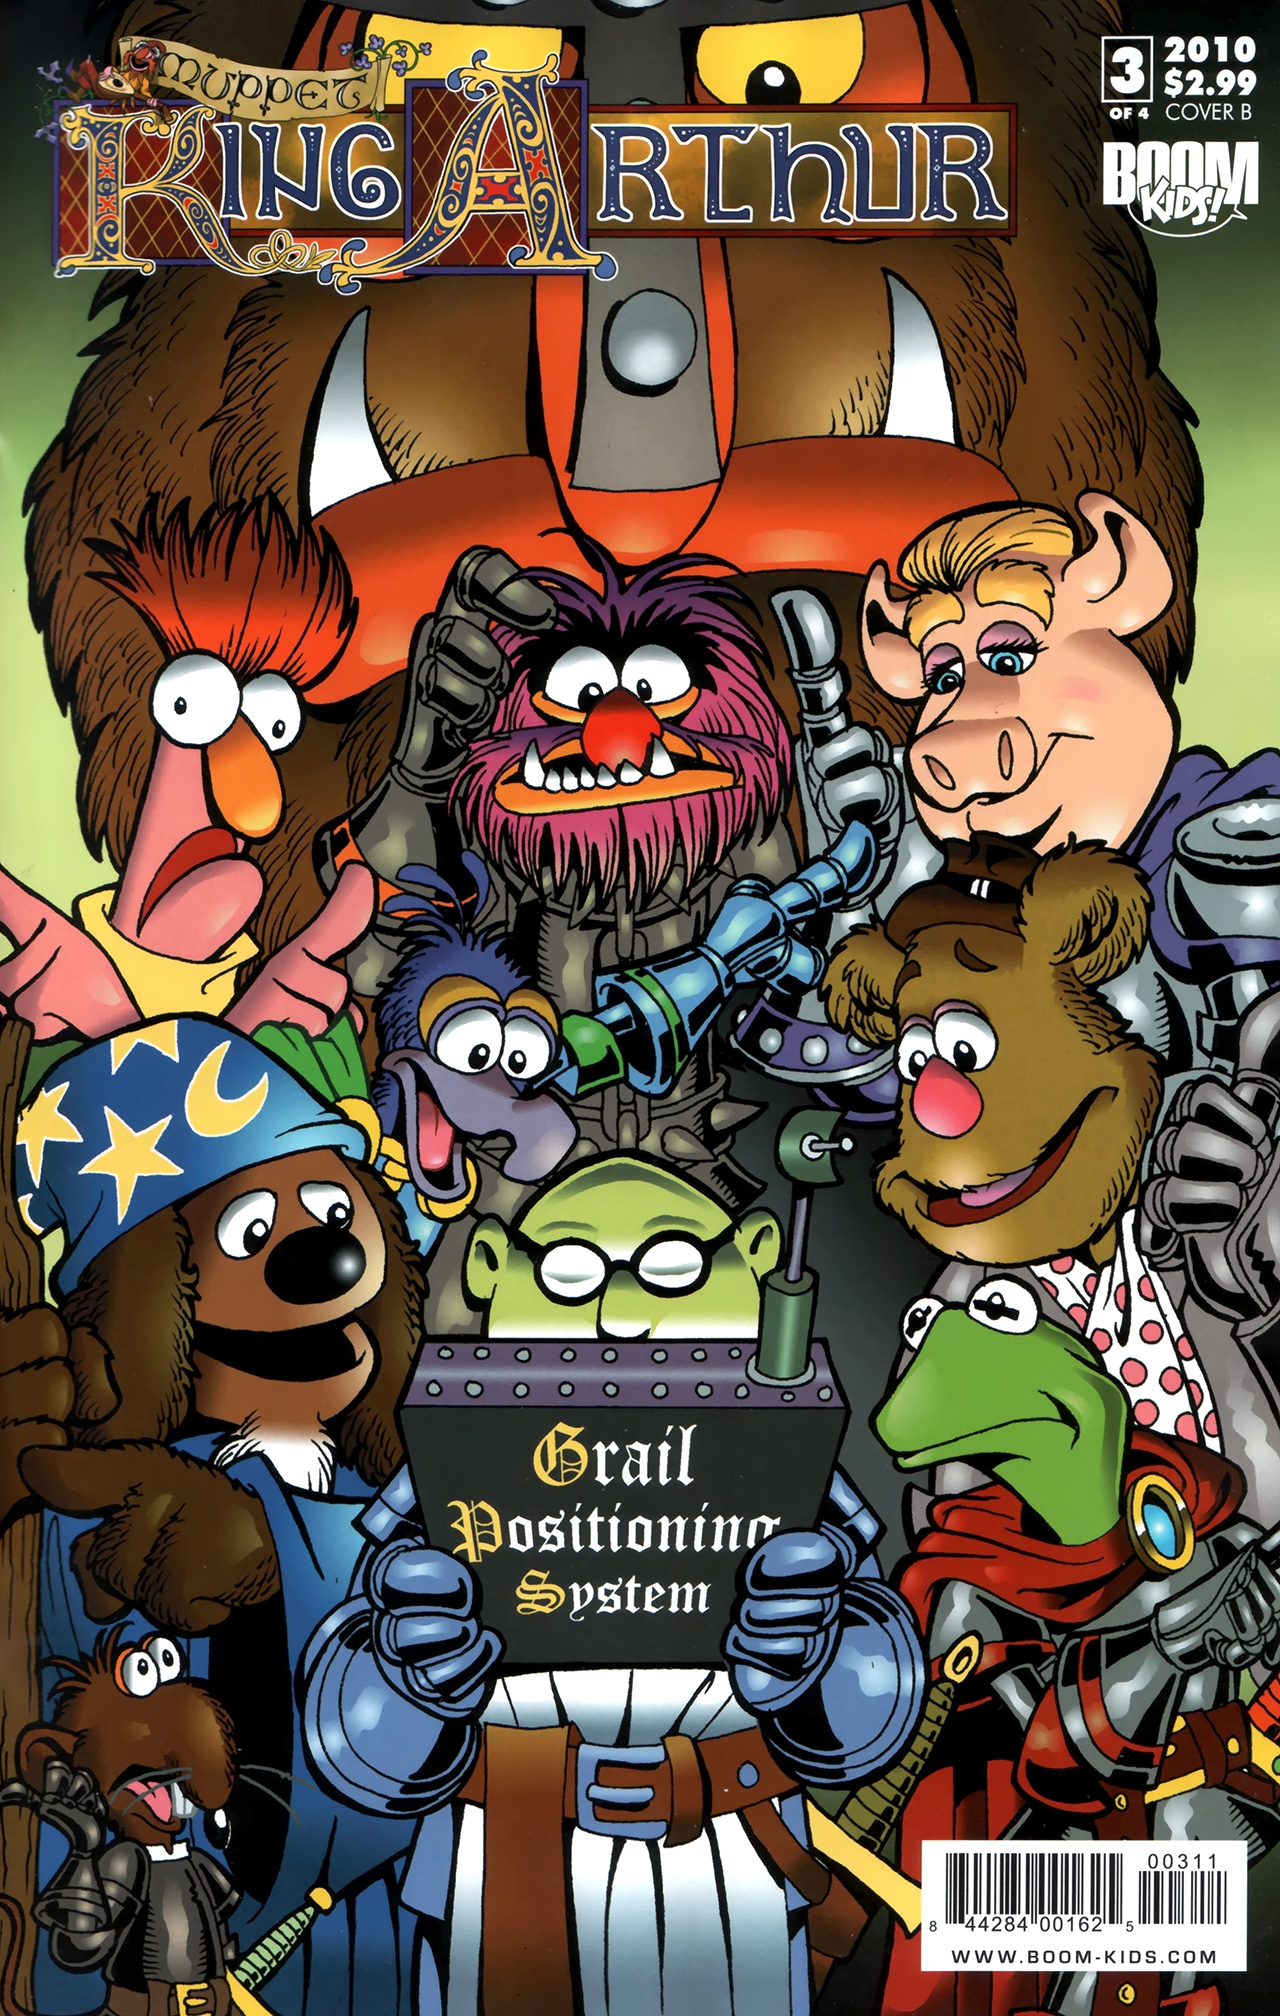 Read online Muppet King Arthur comic -  Issue #3 - 2